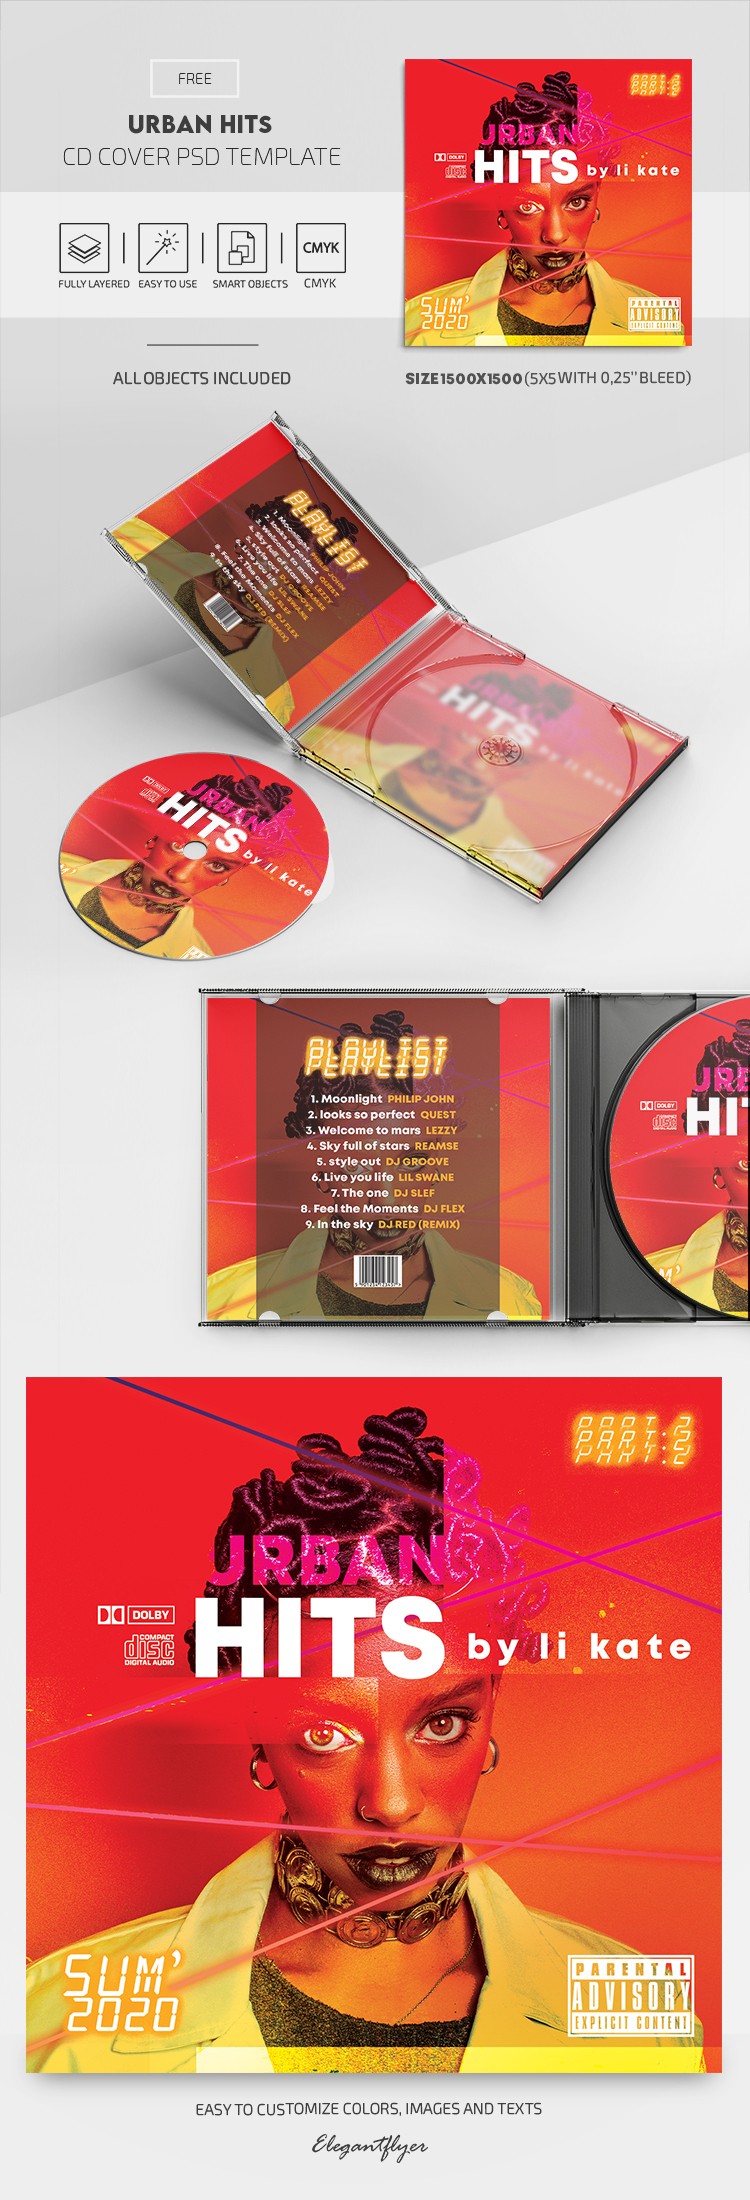 Urban Hits CD Cover
Couverture du CD Urban Hits by ElegantFlyer